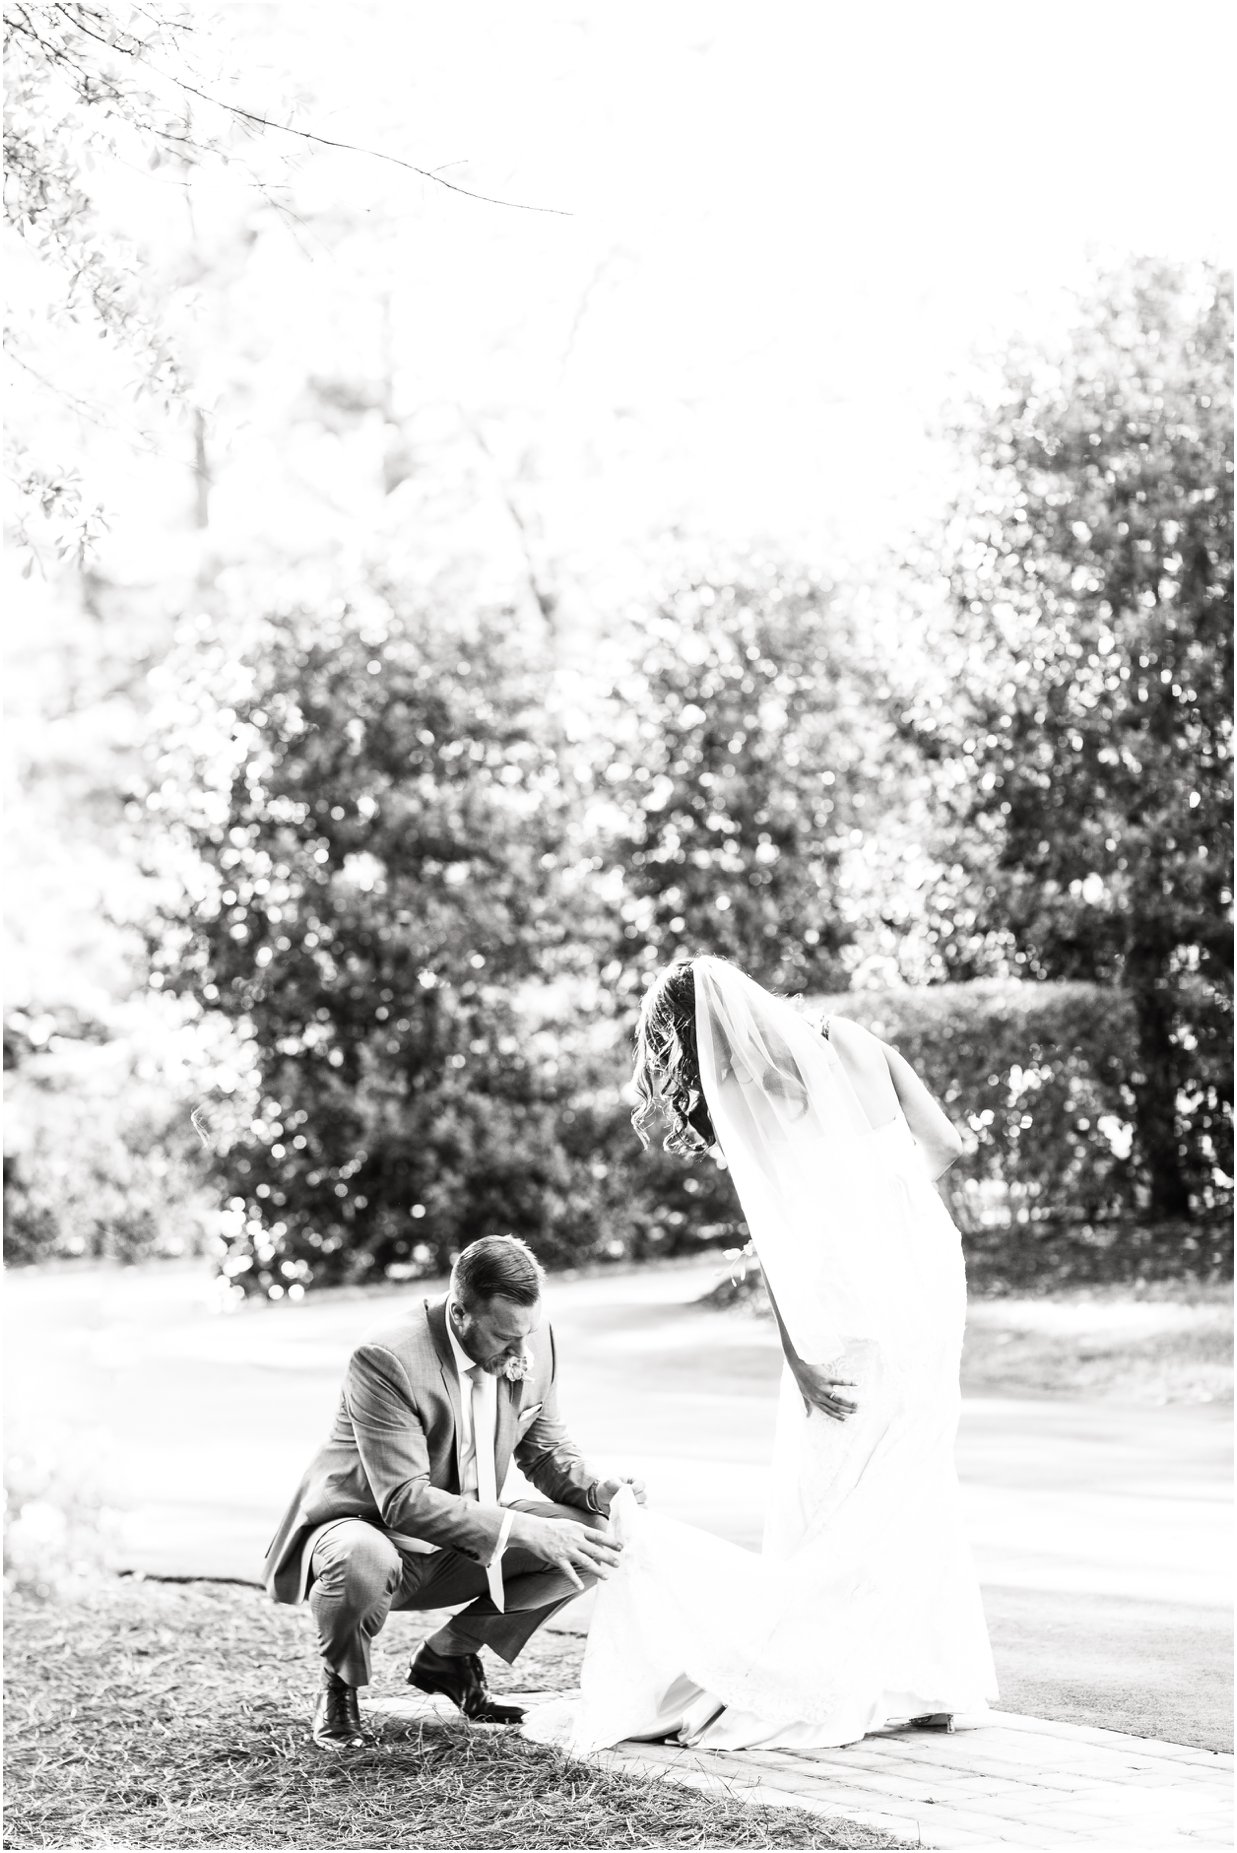 Raleigh wedding photographer